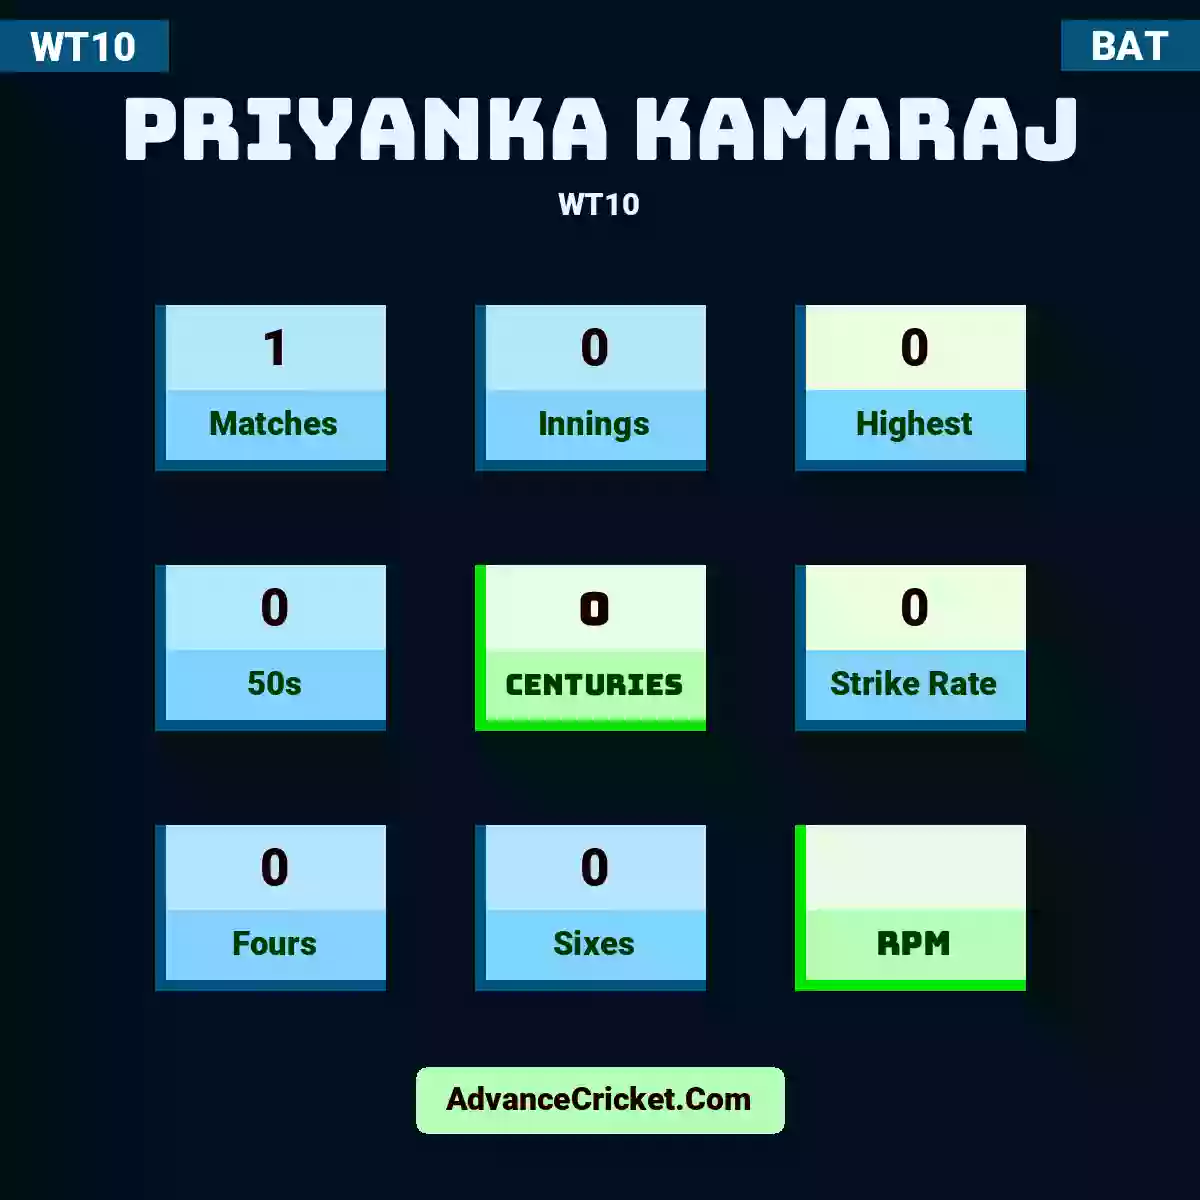 Priyanka Kamaraj WT10 , Priyanka Kamaraj played 1 matches, scored 0 runs as highest, 0 half-centuries, and 0 centuries, with a strike rate of 0. P.Kamaraj hit 0 fours and 0 sixes.